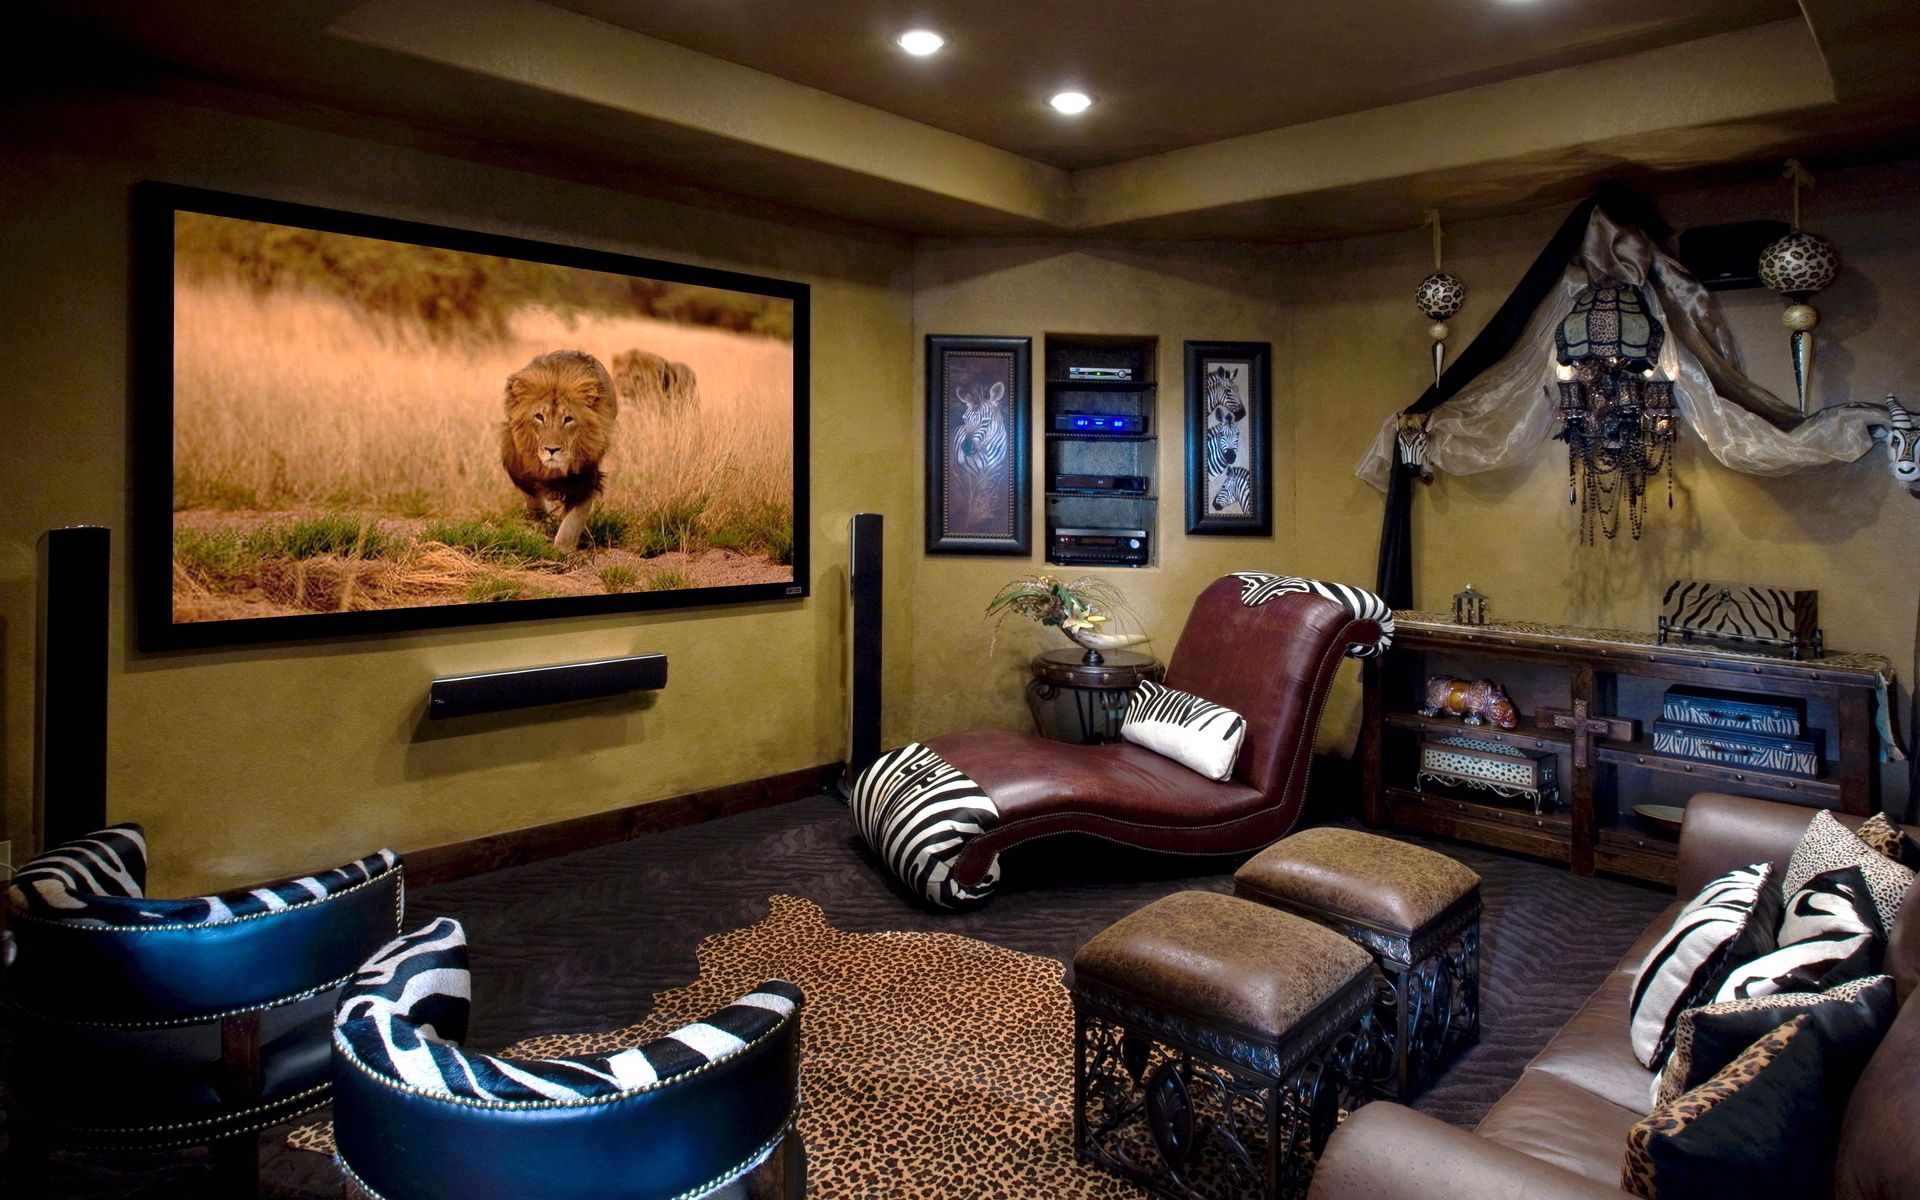 furniture, miscellaneous, interior, miscellanea, style, television, television set iphone wallpaper